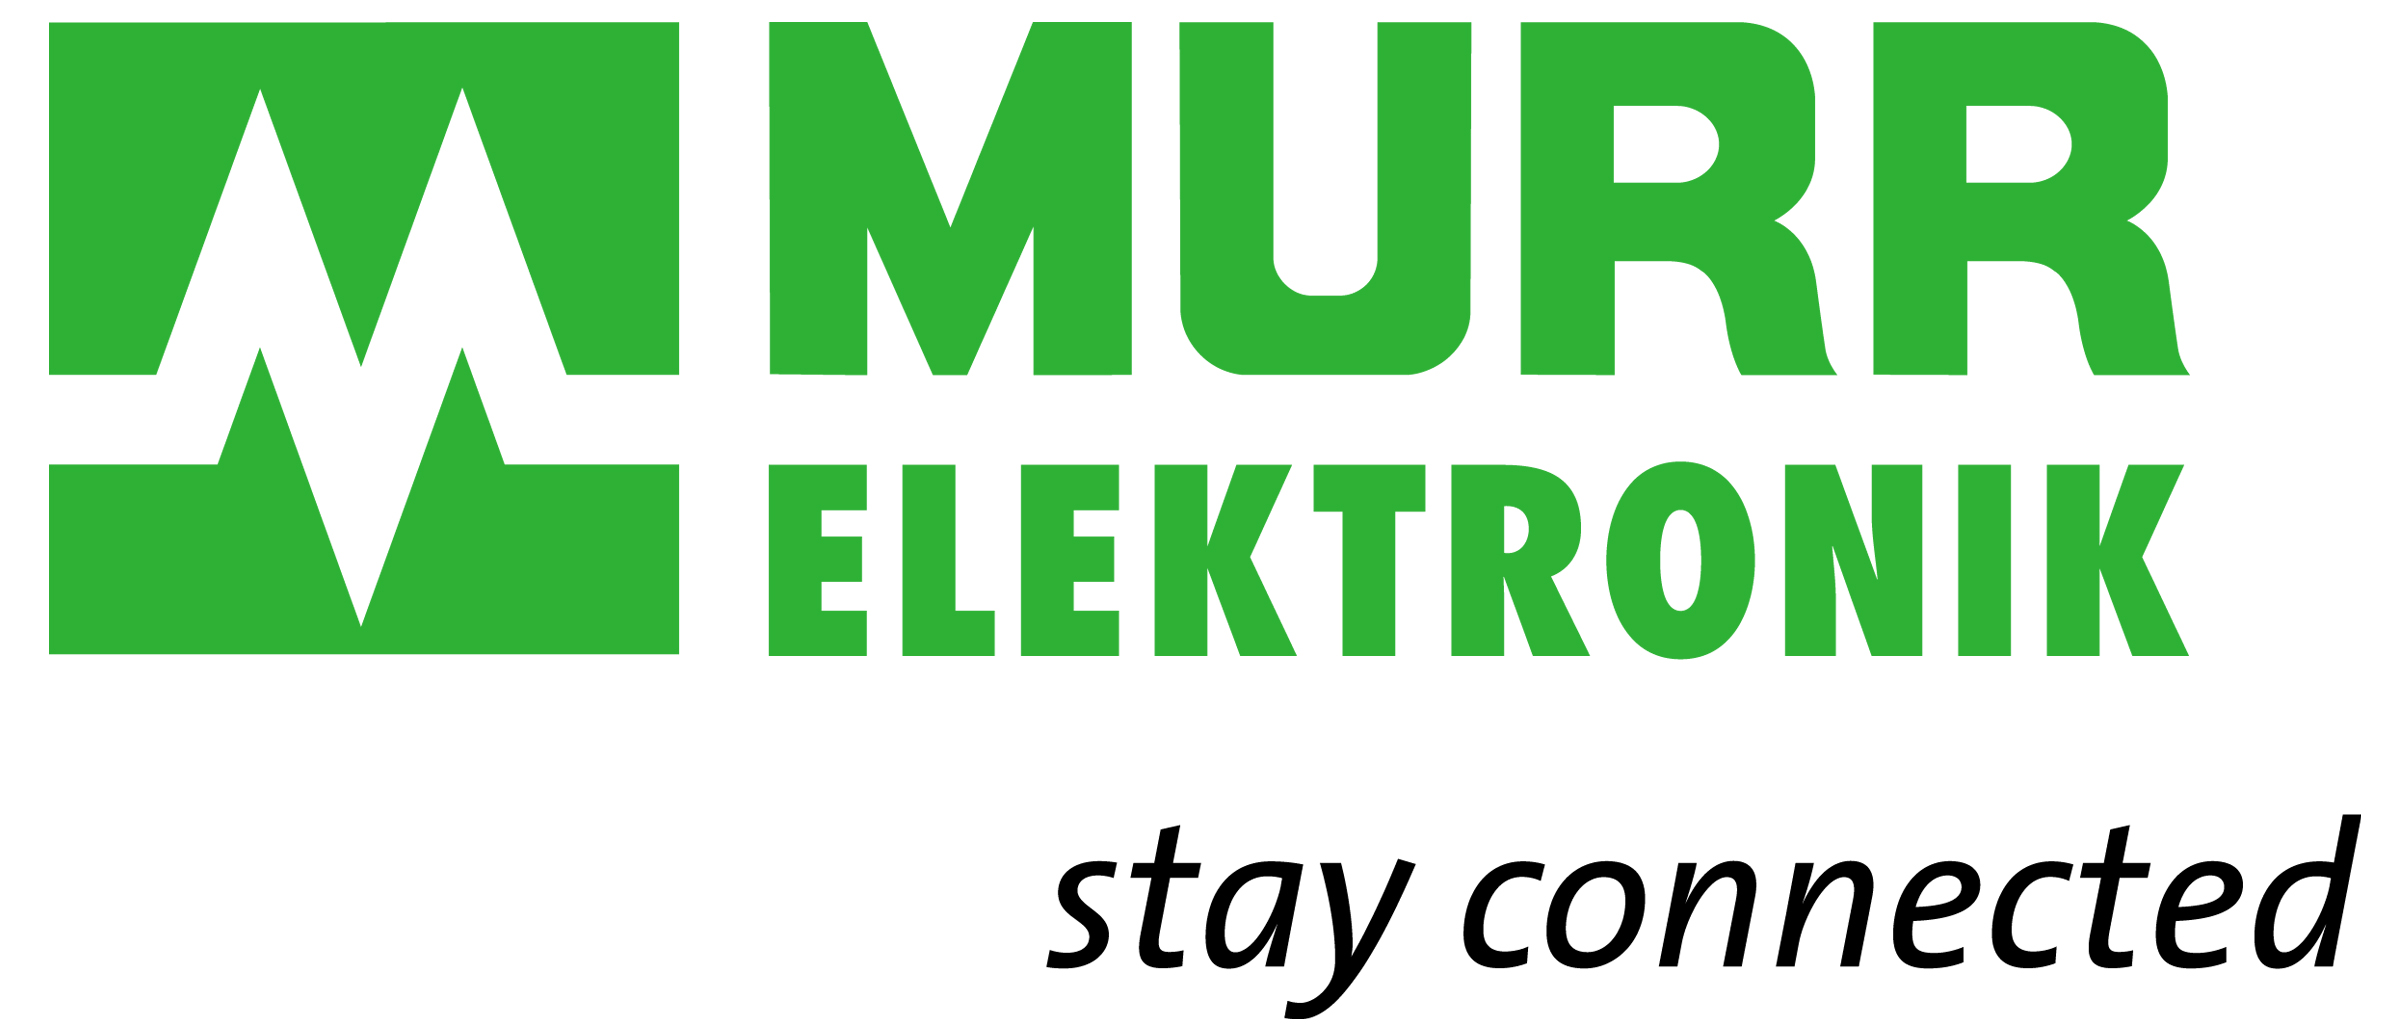 Murrelektronik logo with tag